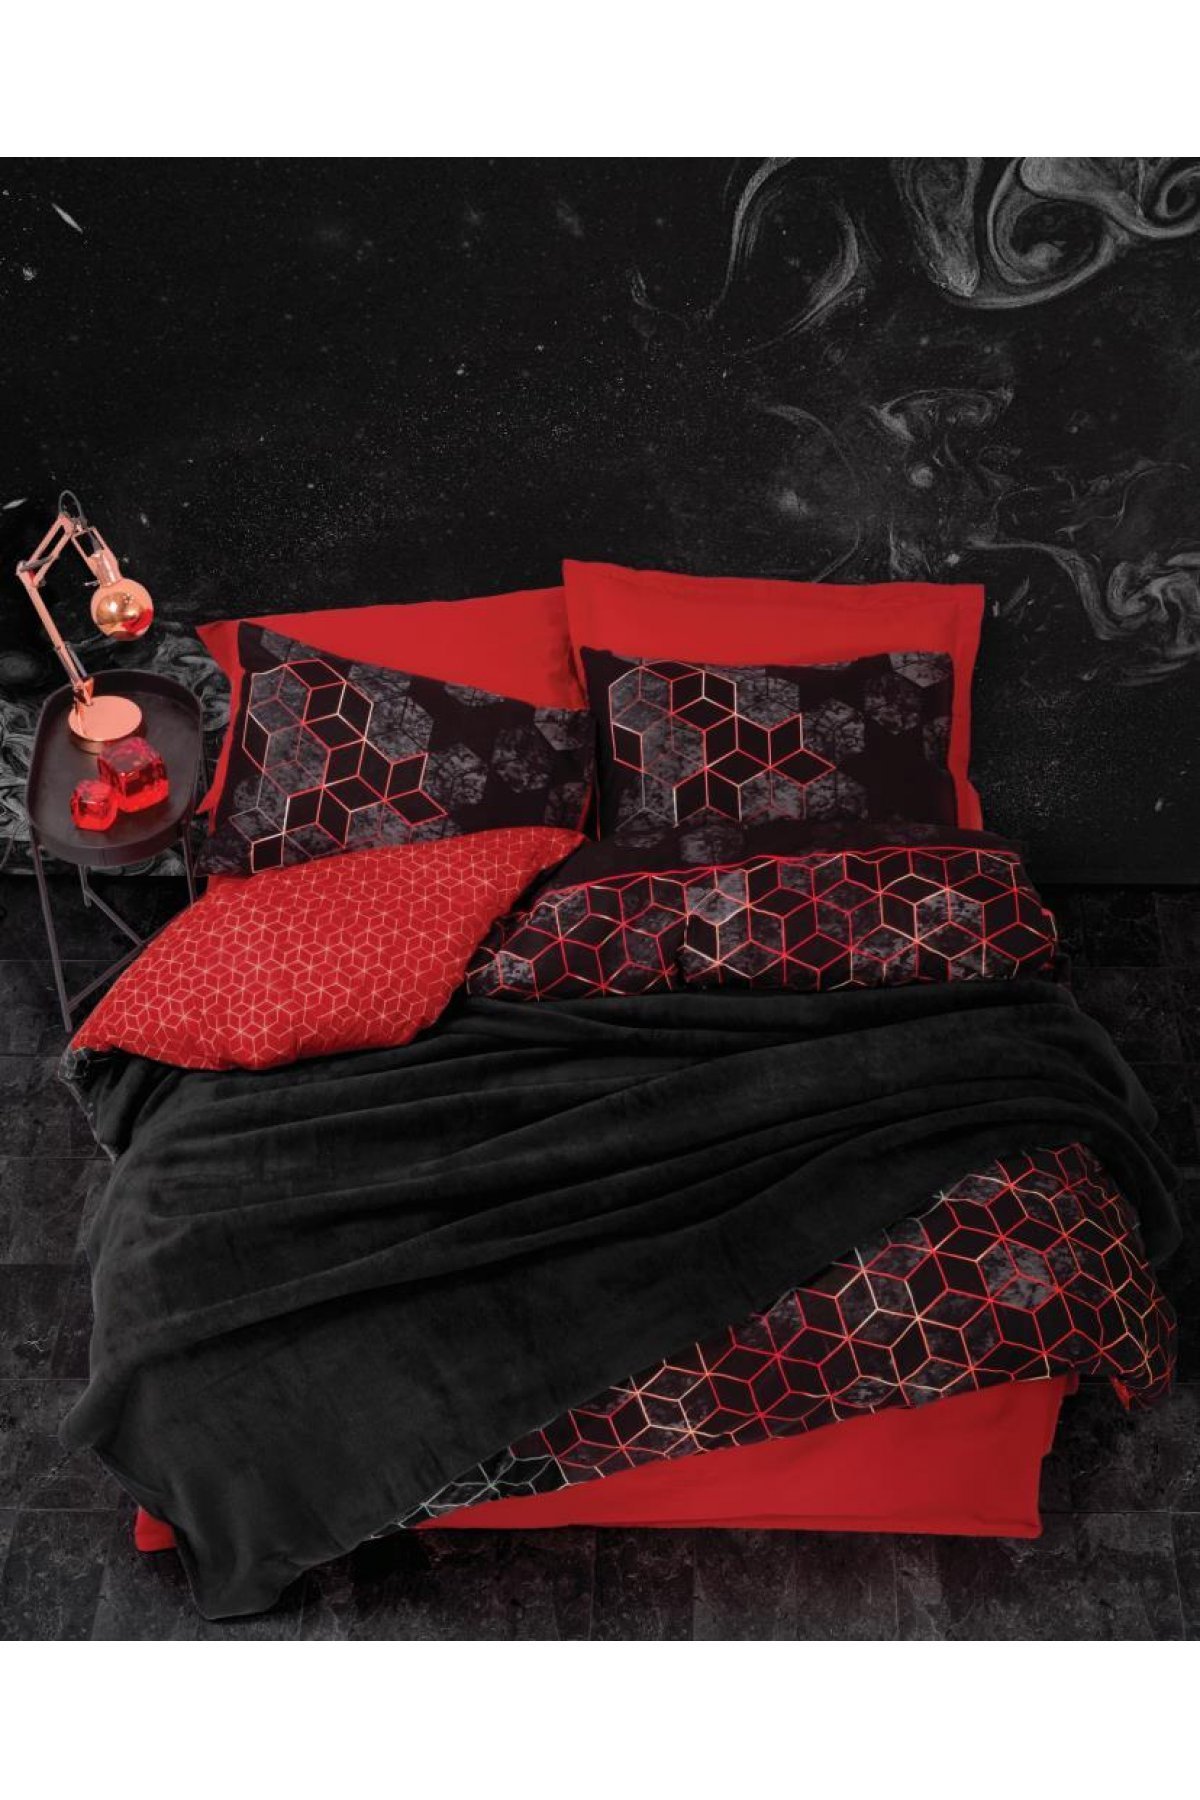 Bedding-Claret Red